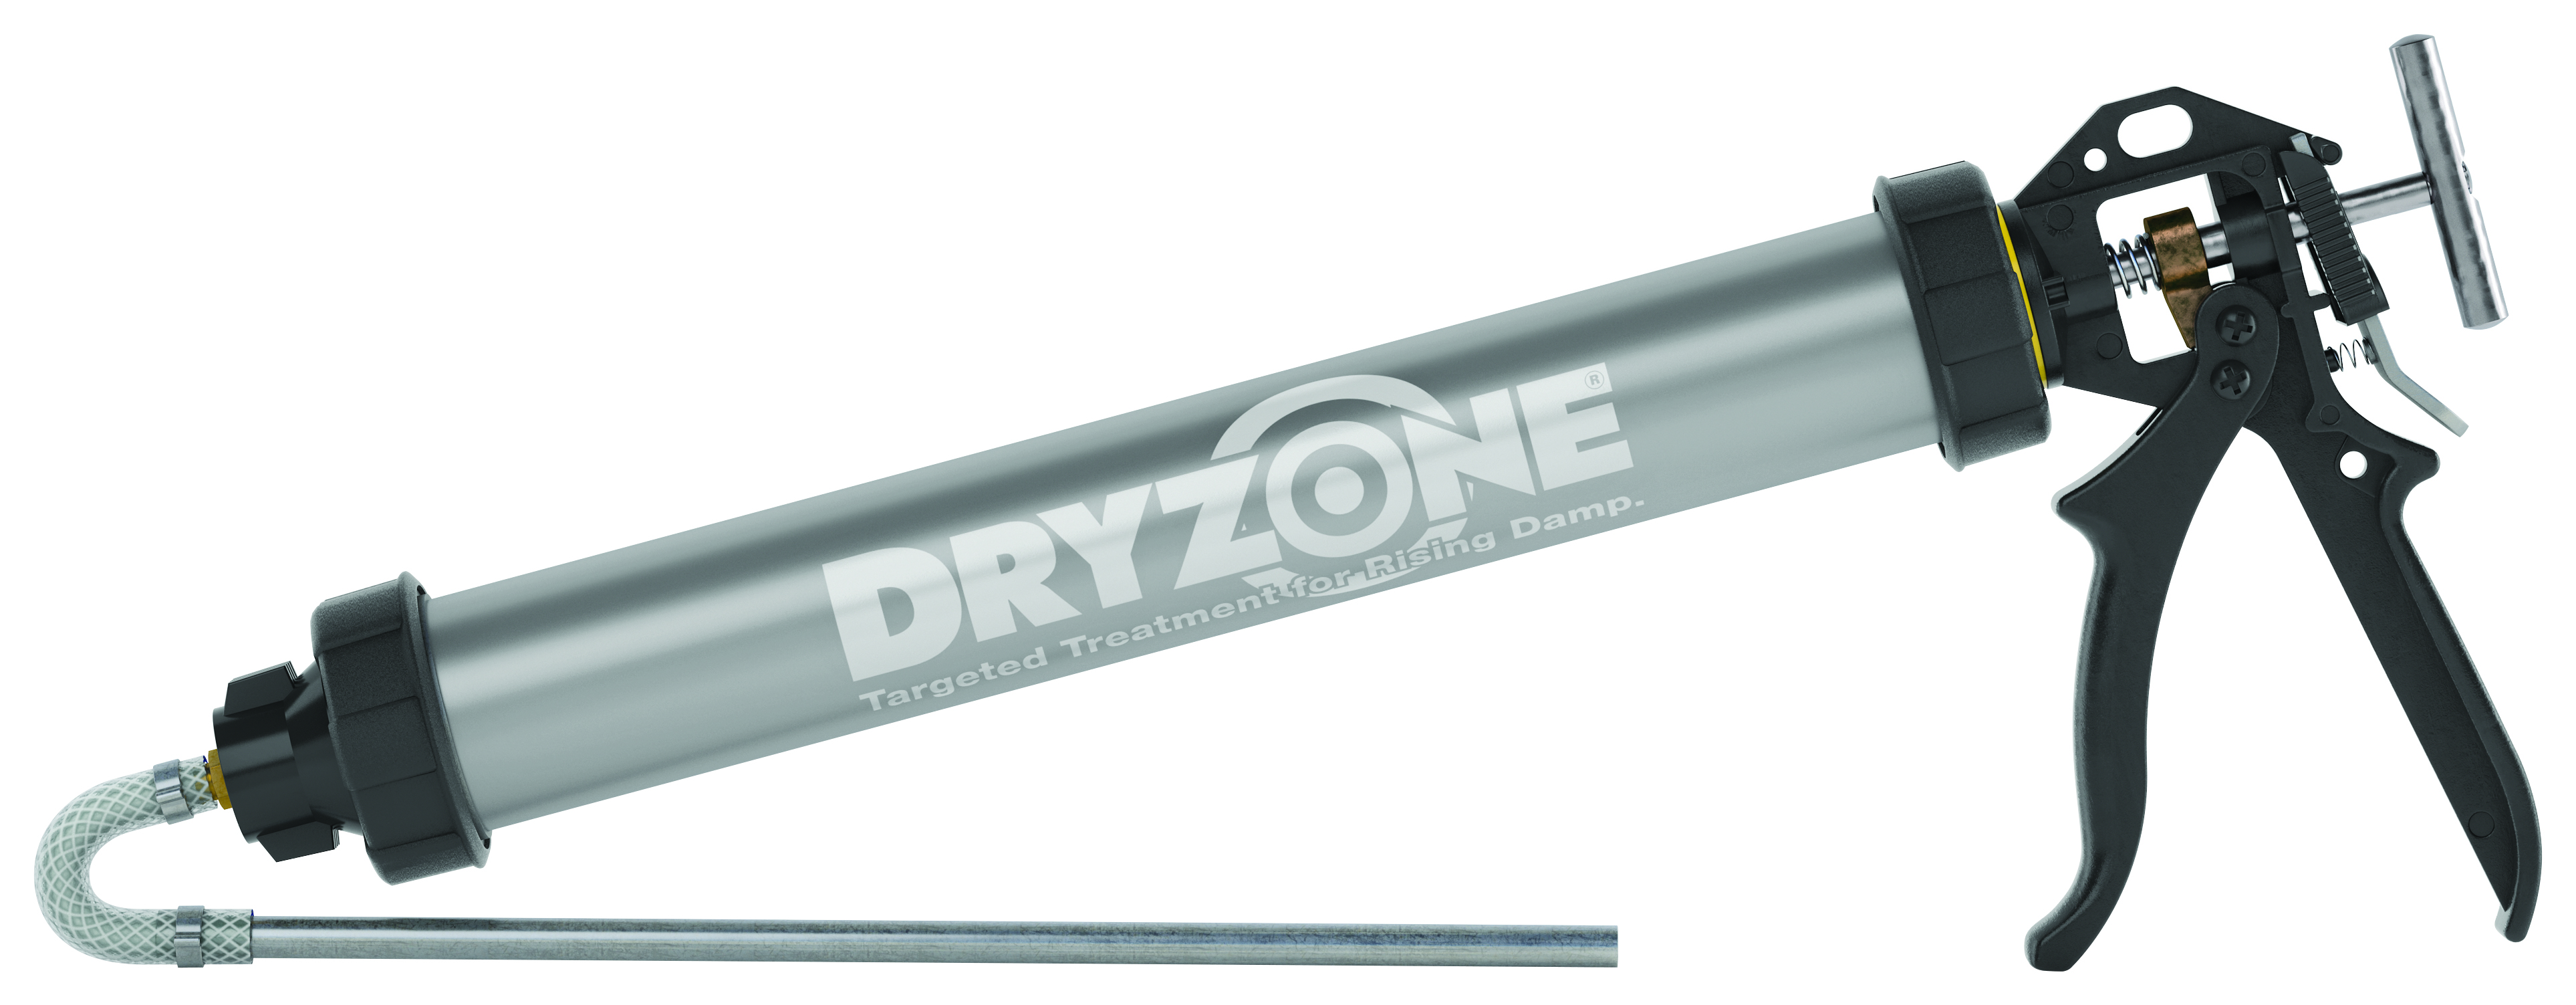 Image of Dryzone DPC Cream Foil Applicator Gun